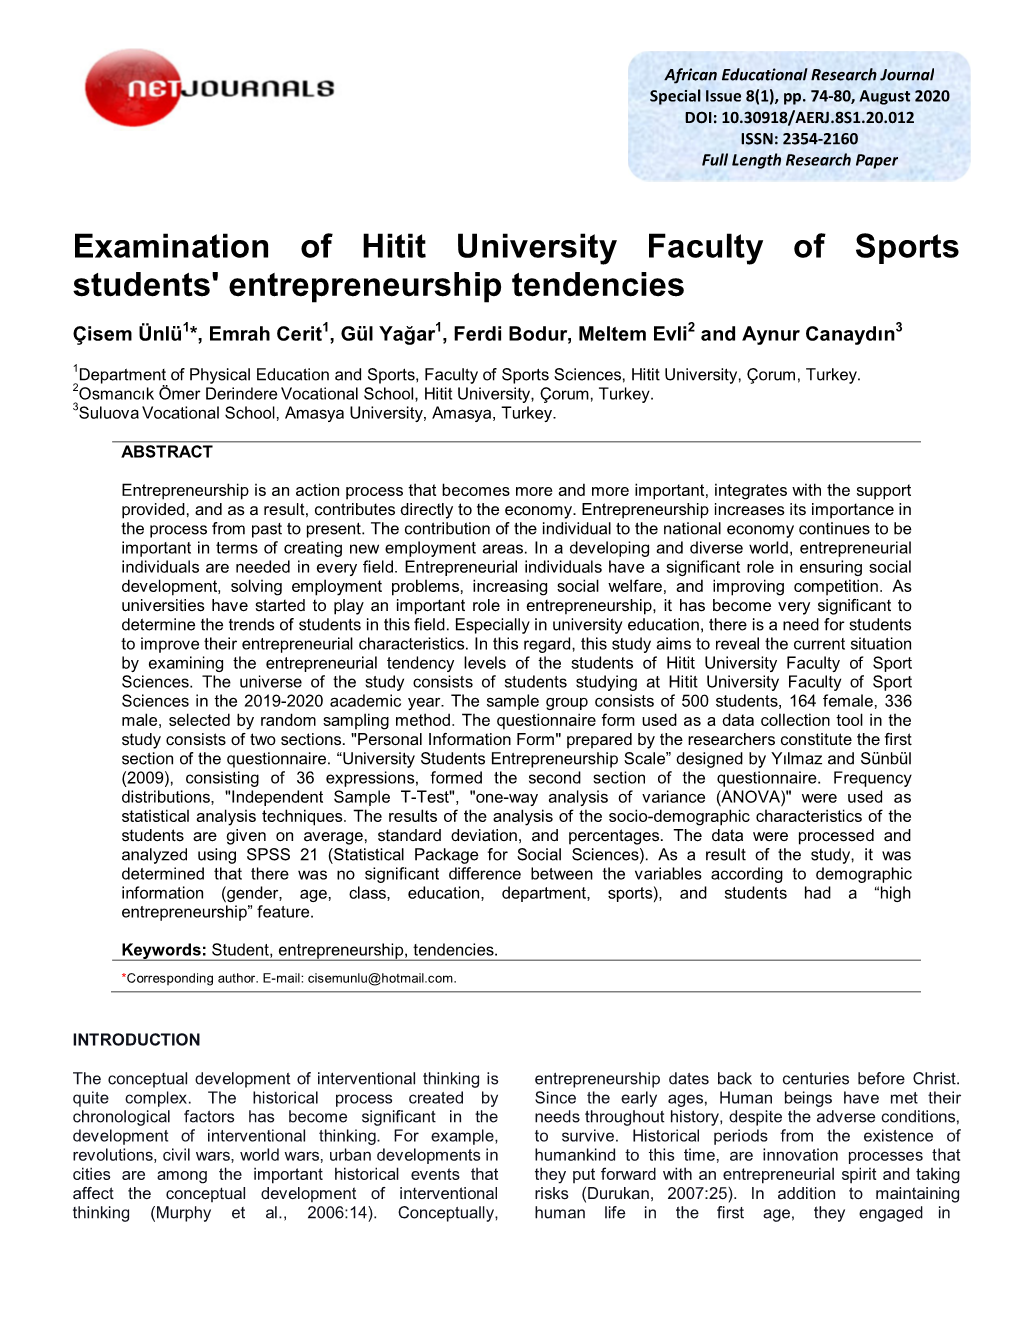 Examination of Hitit University Faculty of Sports Students' Entrepreneurship Tendencies